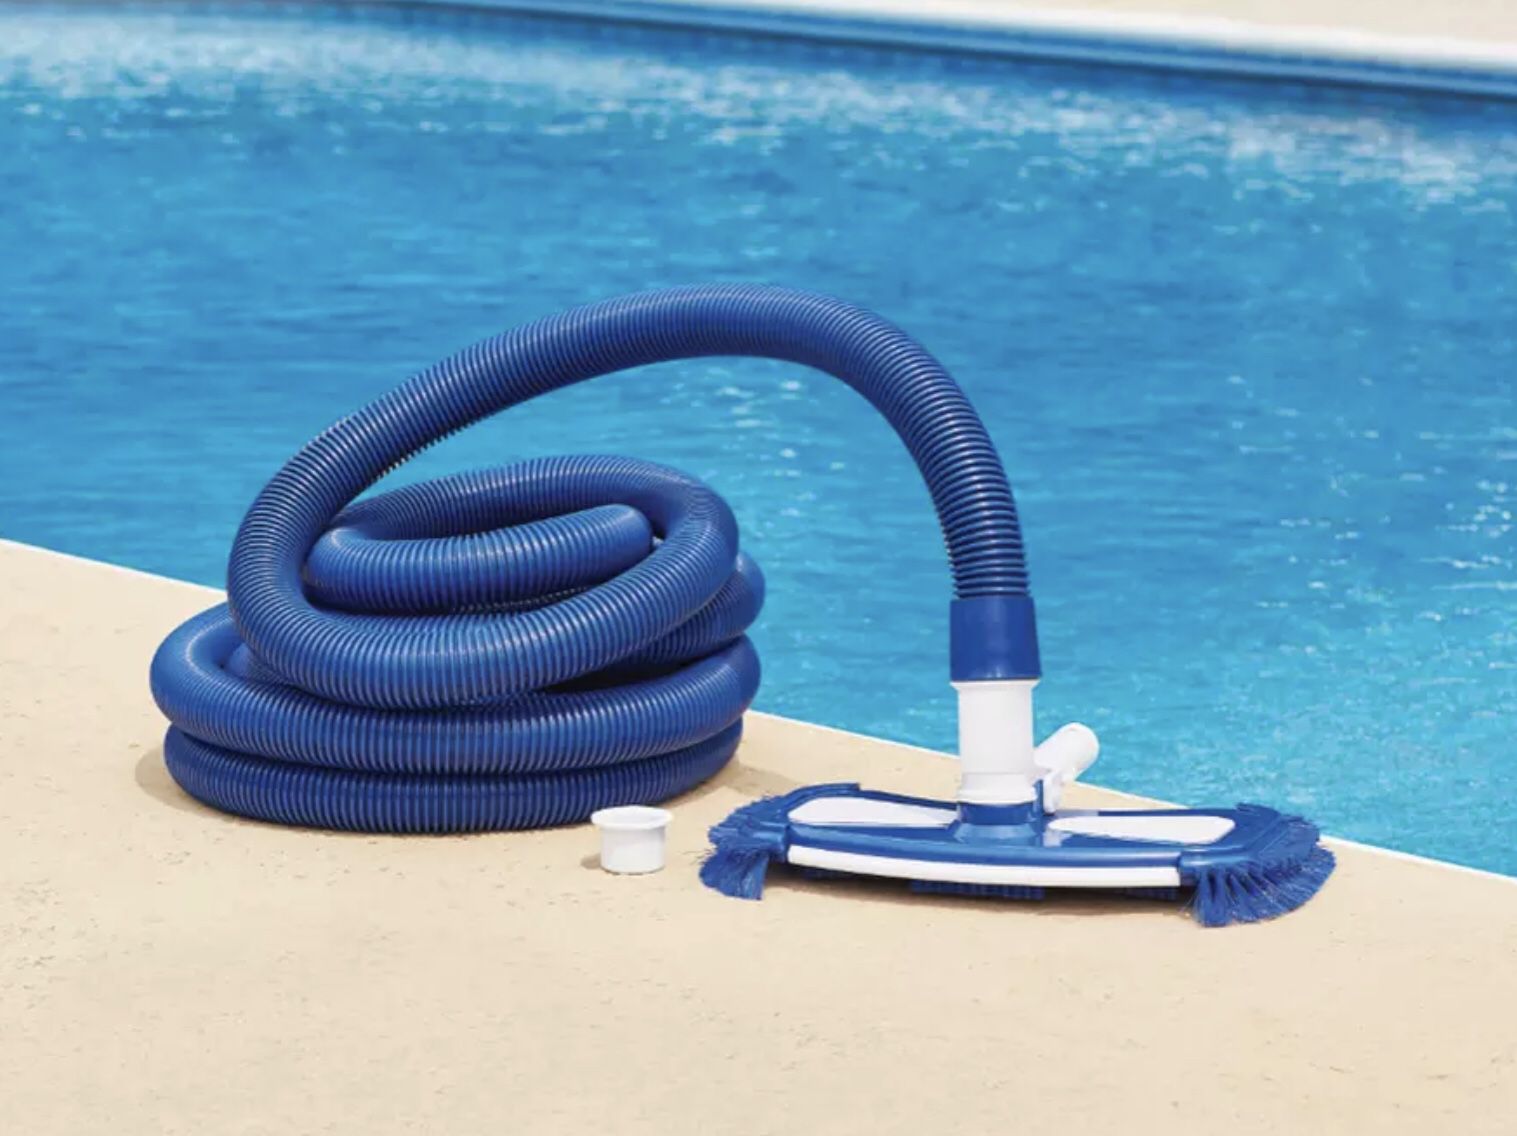 Mainstays 2pc Pool Cleaning Kit Include 25FT Hose and Vacuum Head - El kit de limpieza de piscinas